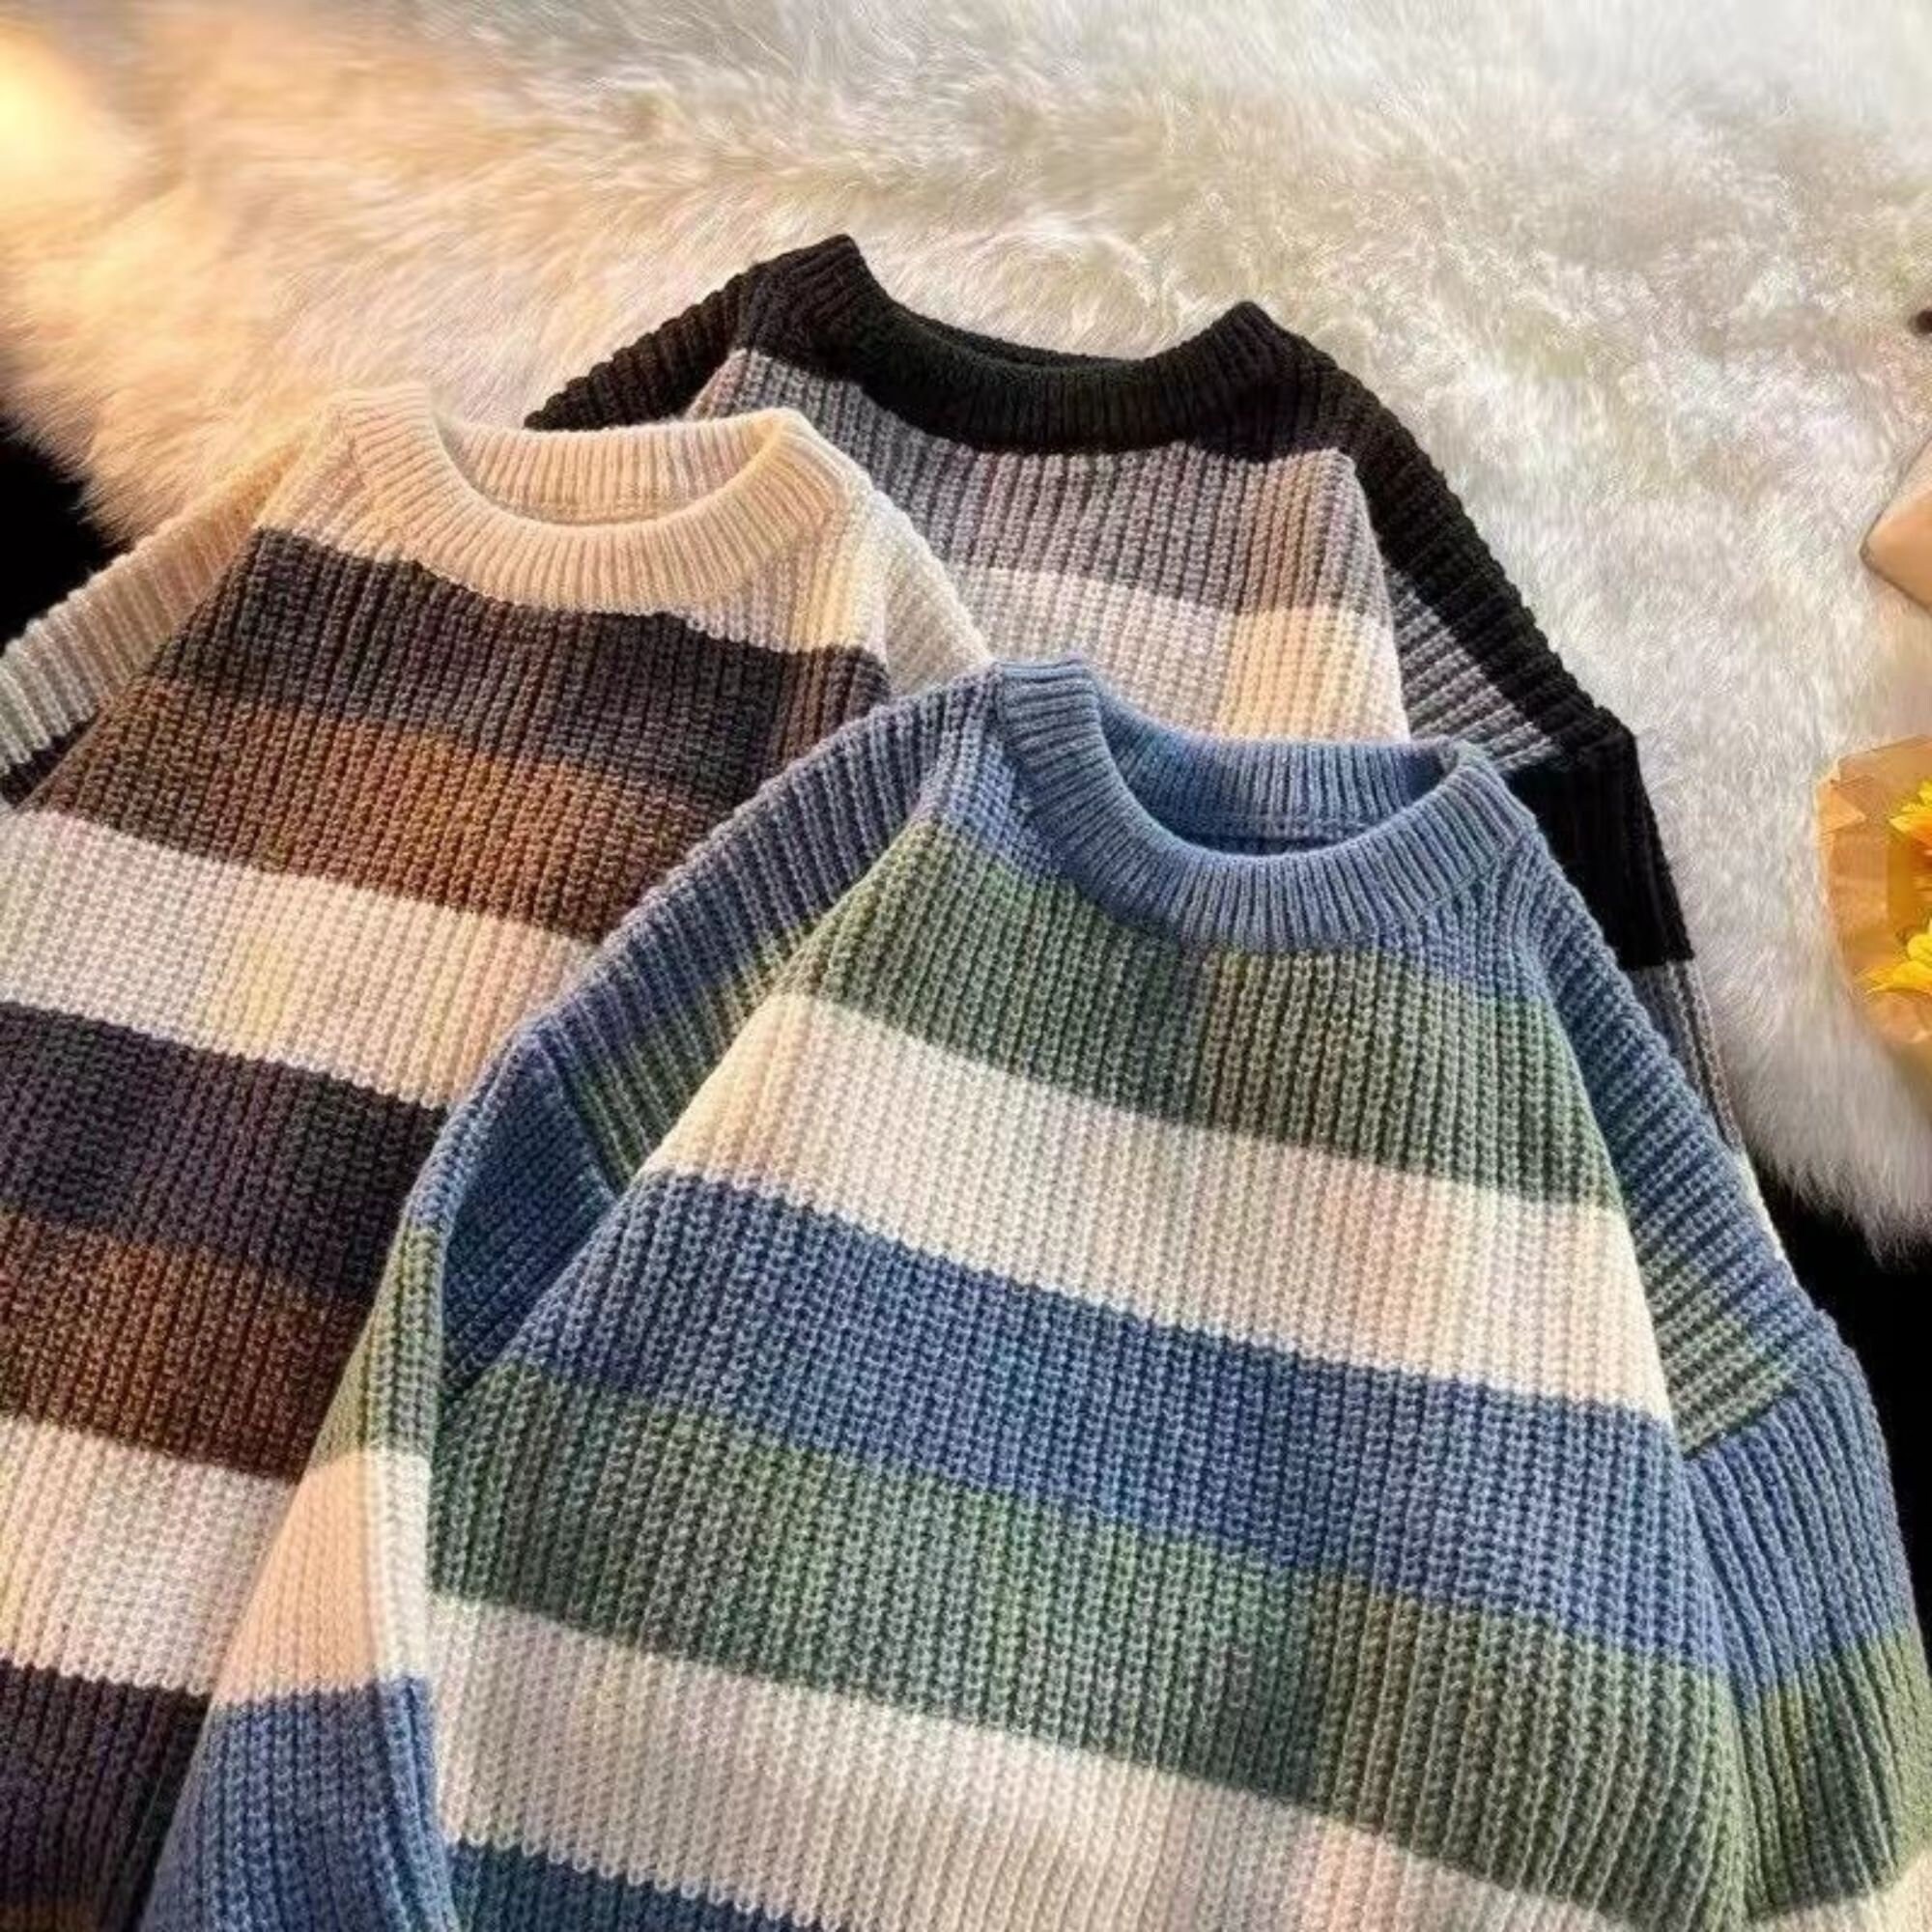 Vintage Striped Sweater Striped Sweatshirts Tops Knitting Sweat Shirt Pullover Loose Harajuku Kawaii High Quality Couple Sweater Gift